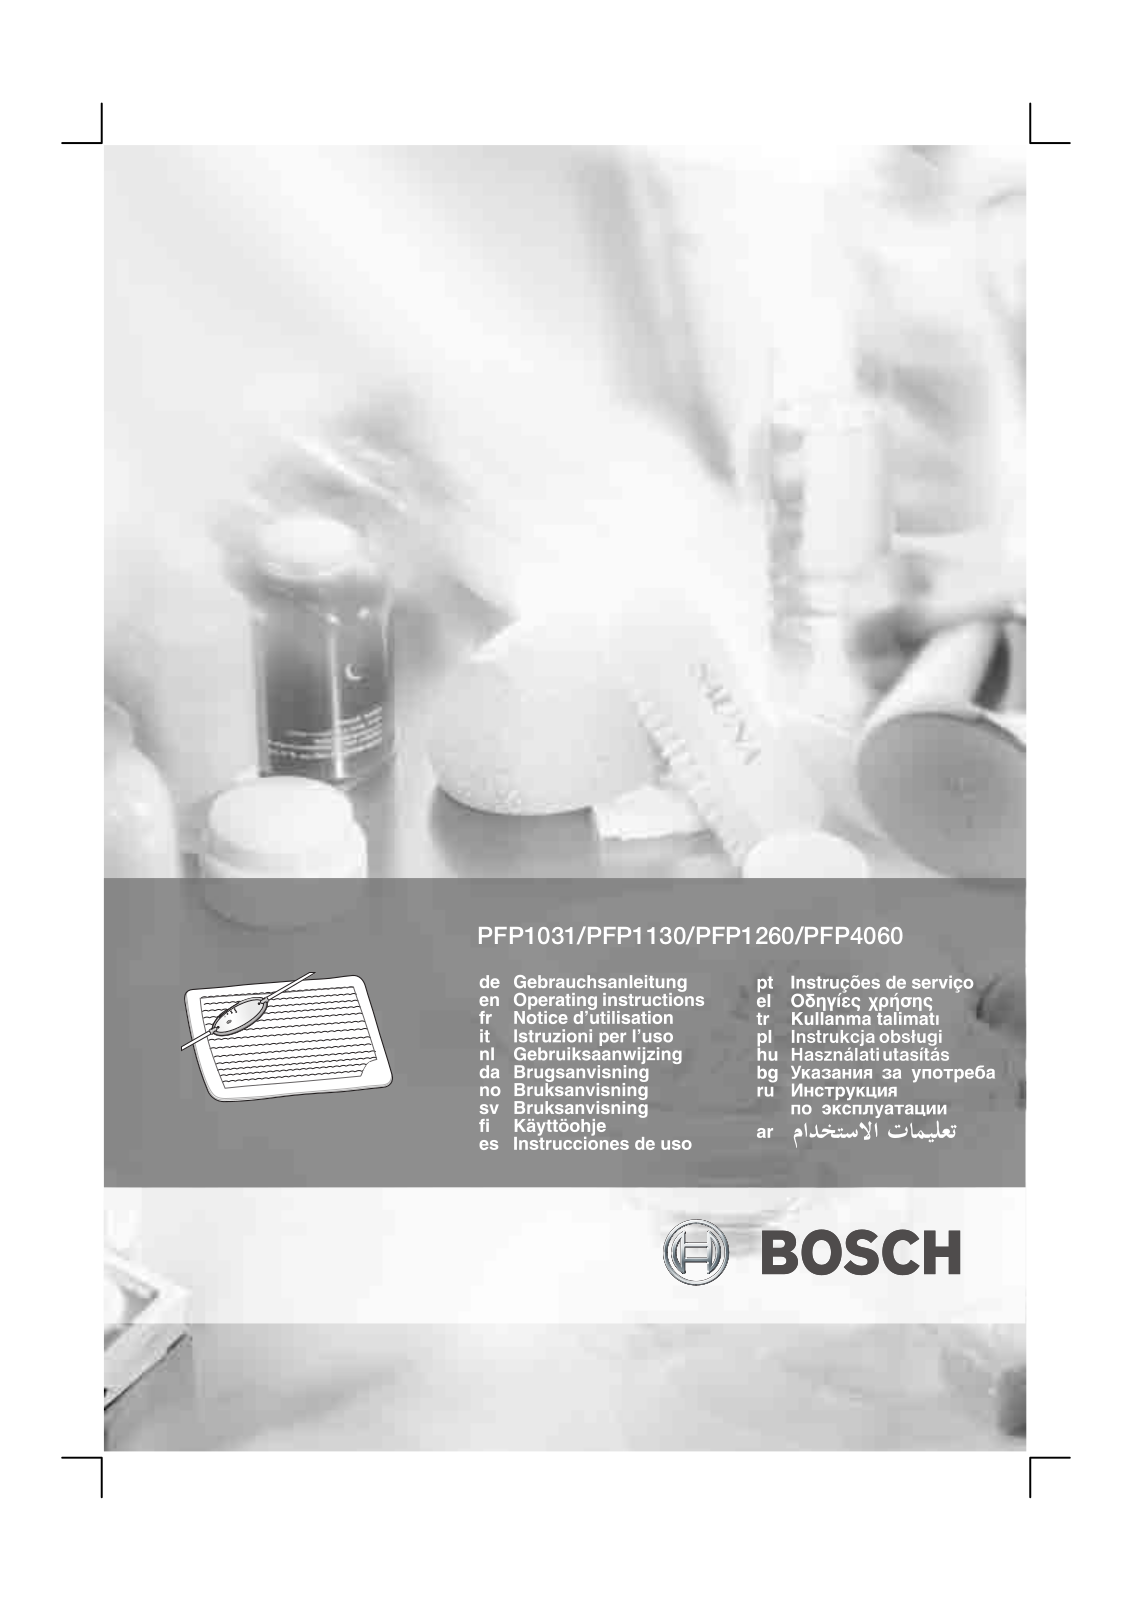 Bosch PFP1130, PFP1260, PFP1031, PFP4060 Manual